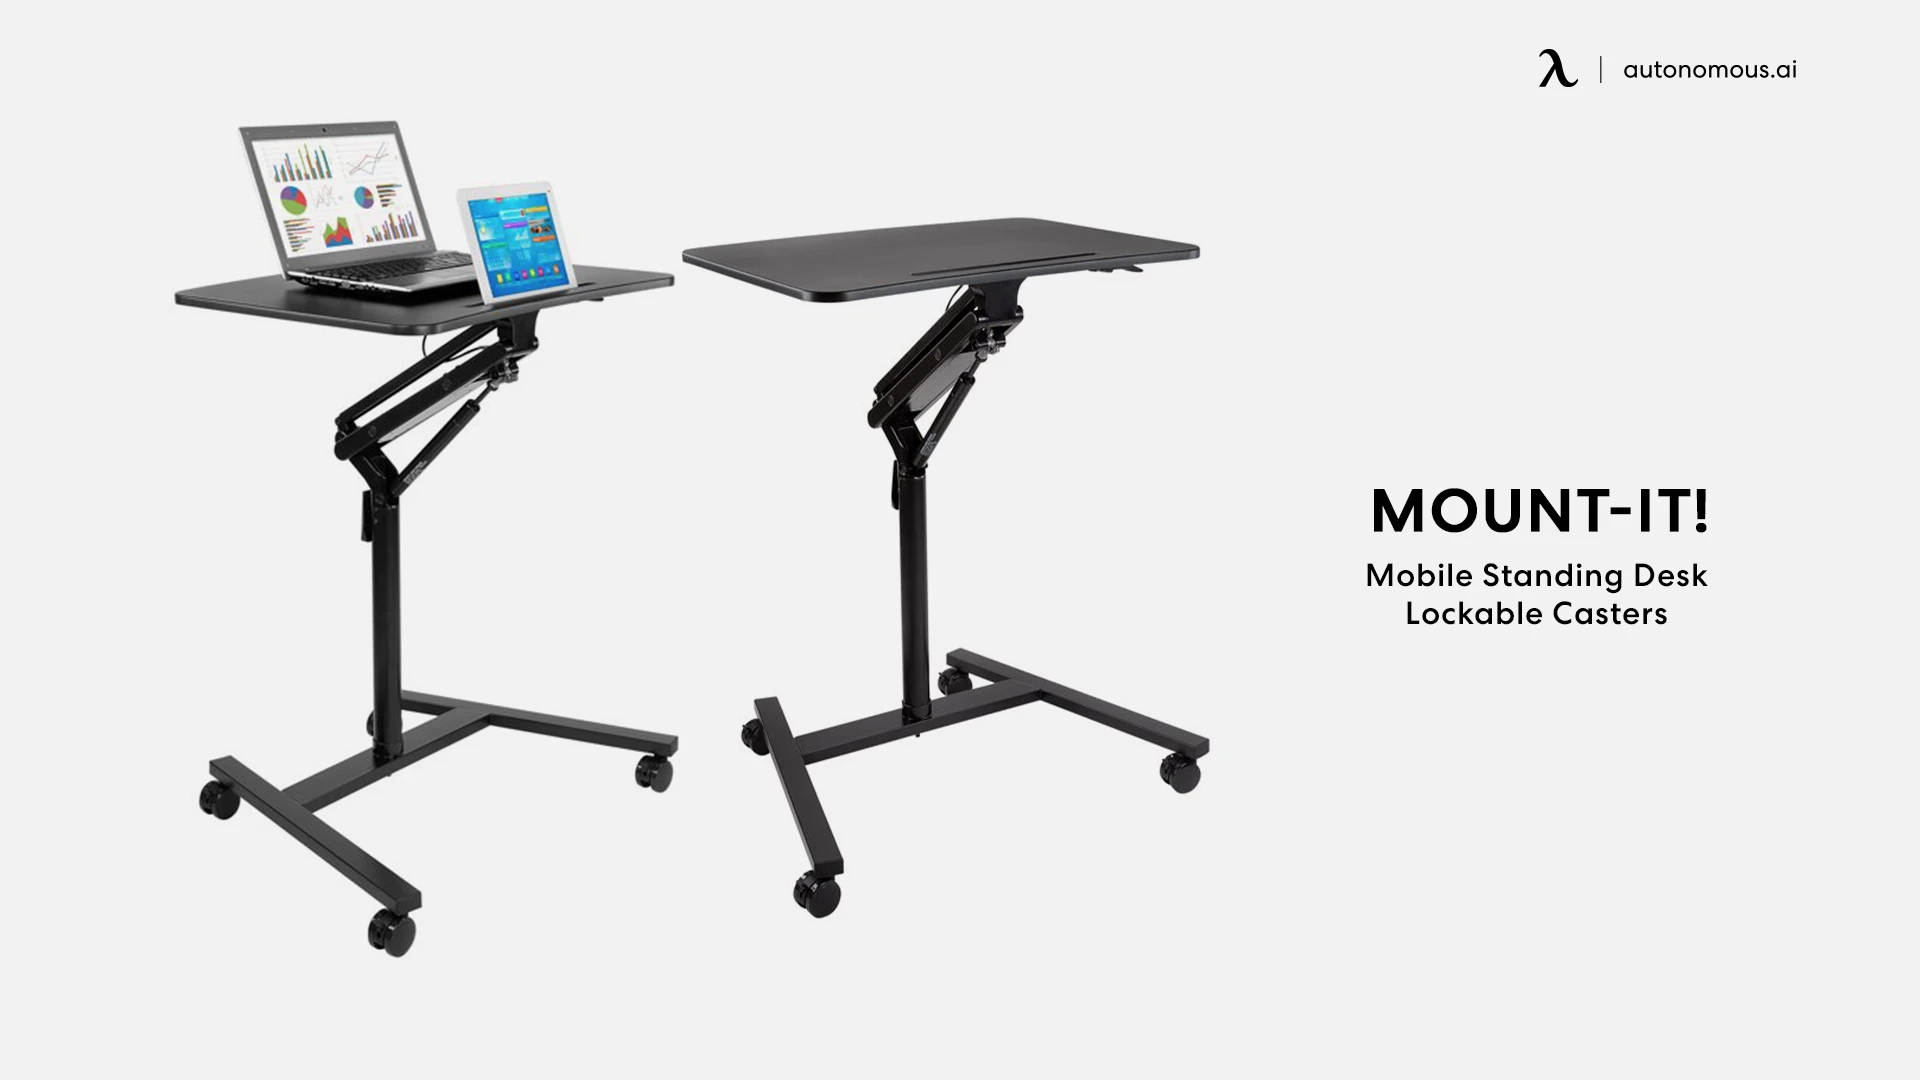 Mount-It! Mobile Standing Desk